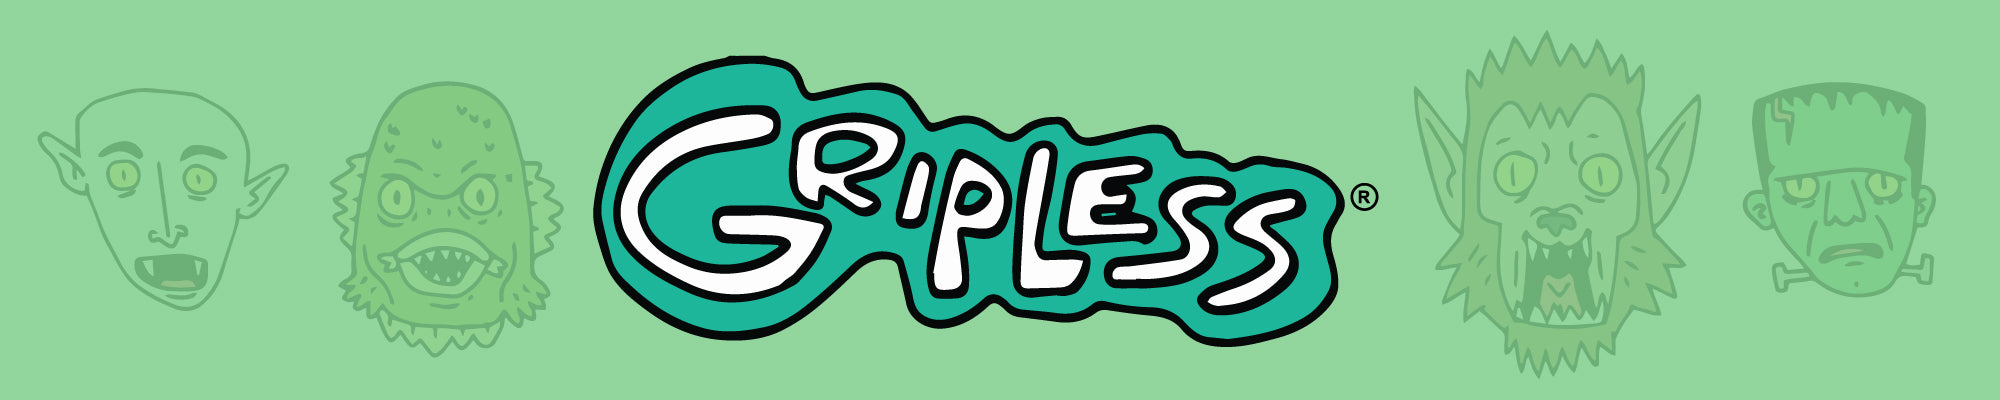 Gripless